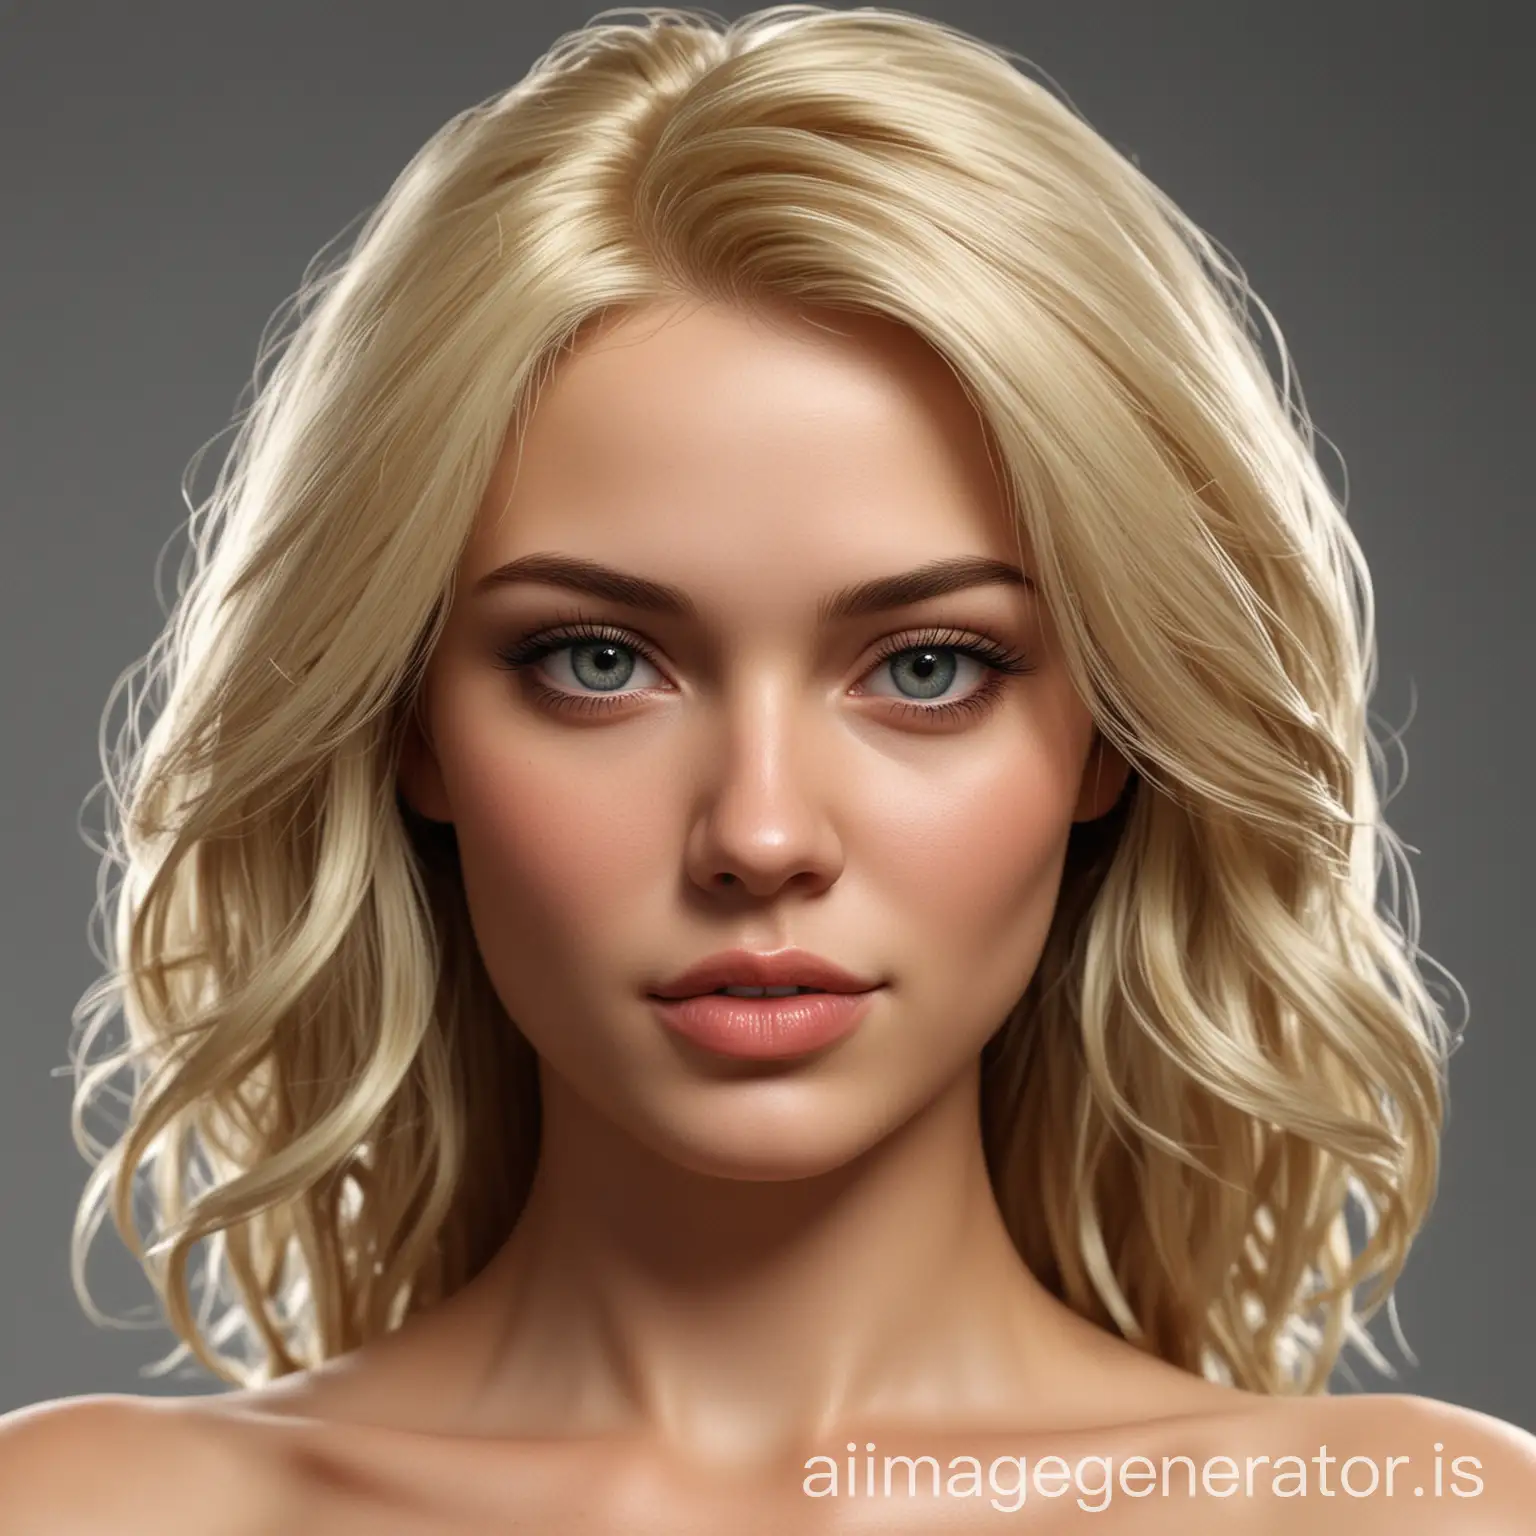 create a beautiful blonde 
women realistic 
